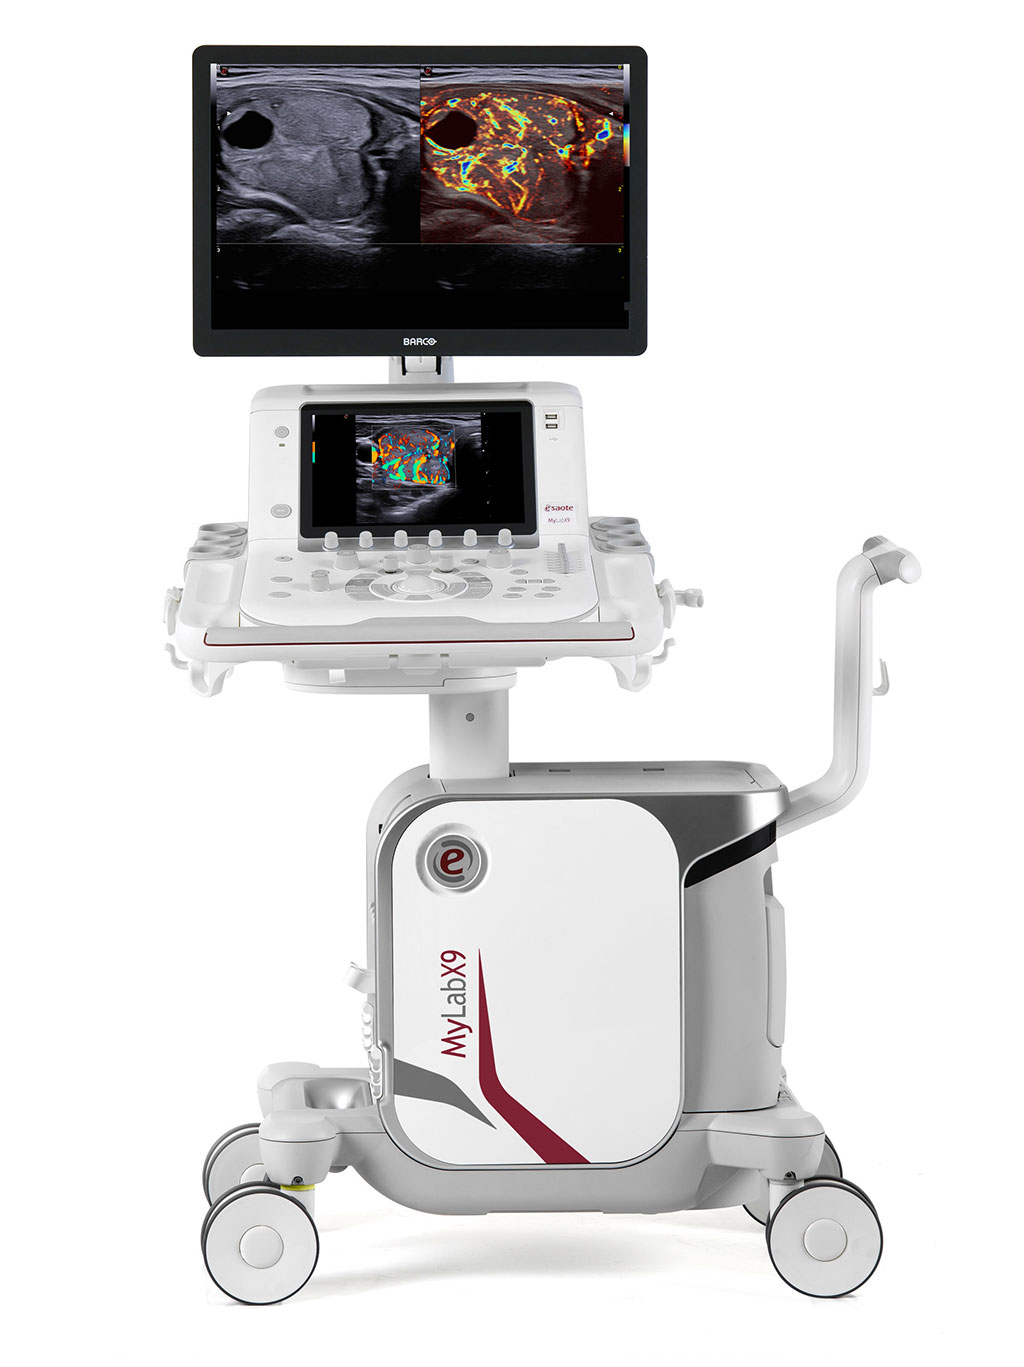 Image: The MyLab X9 64-bit X ULTRA ultrasound system (Photo courtesy of Esaote)